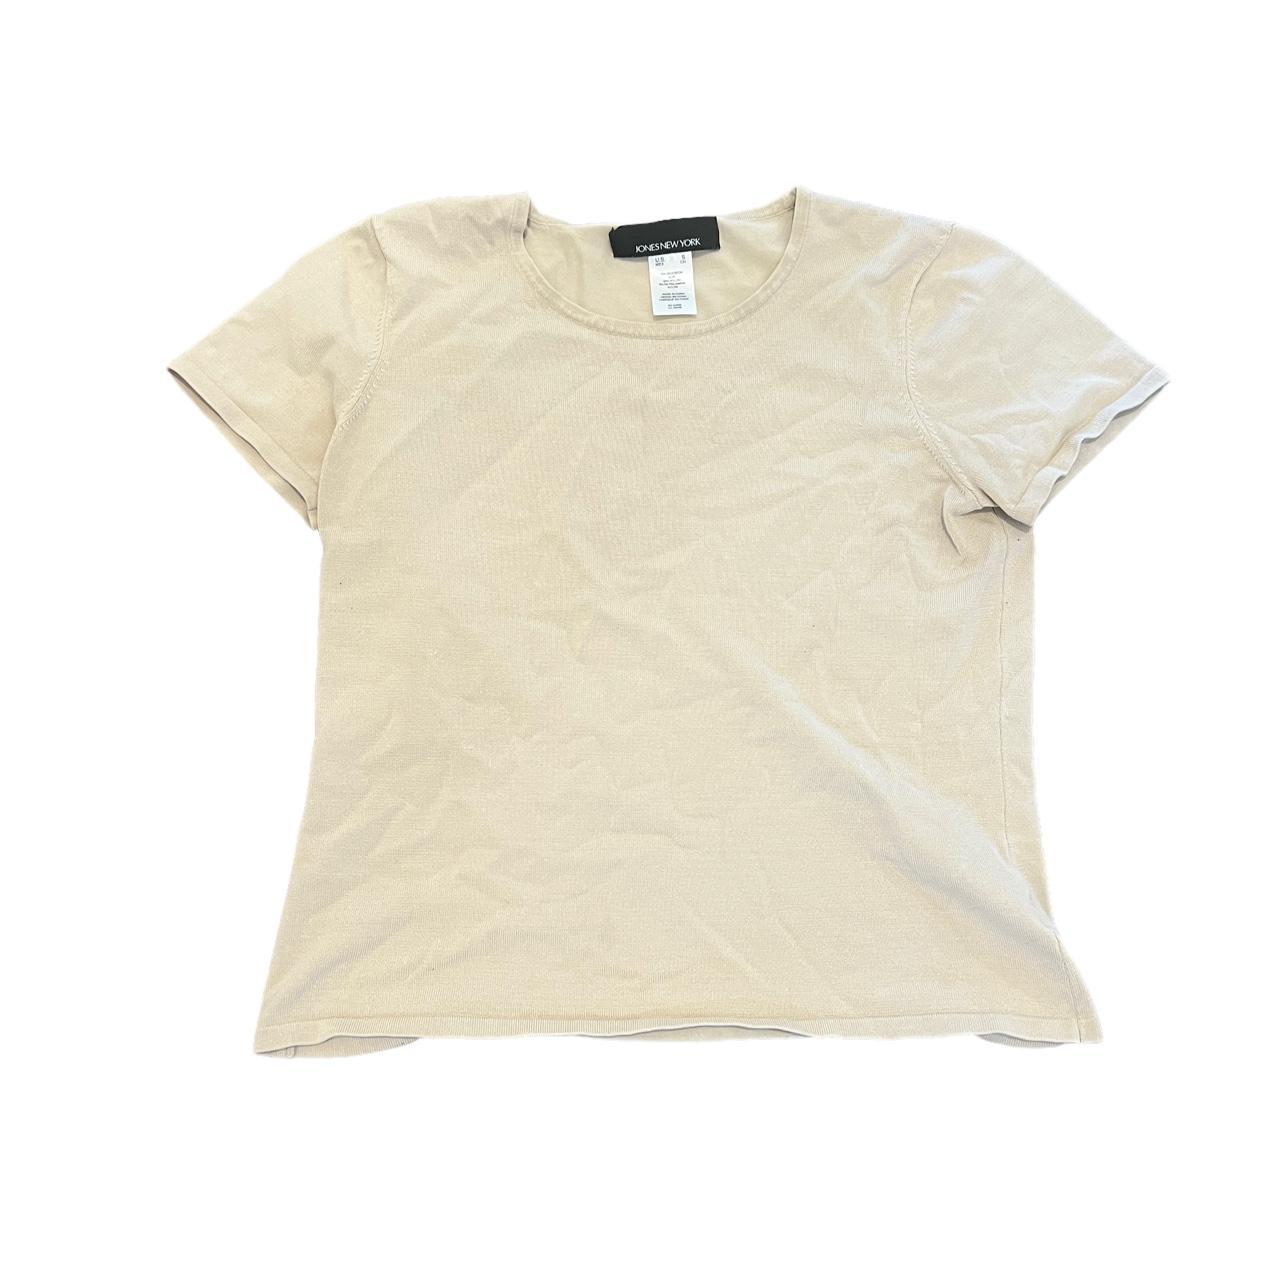 Jones New York Women's Cream and Tan Shirt | Depop